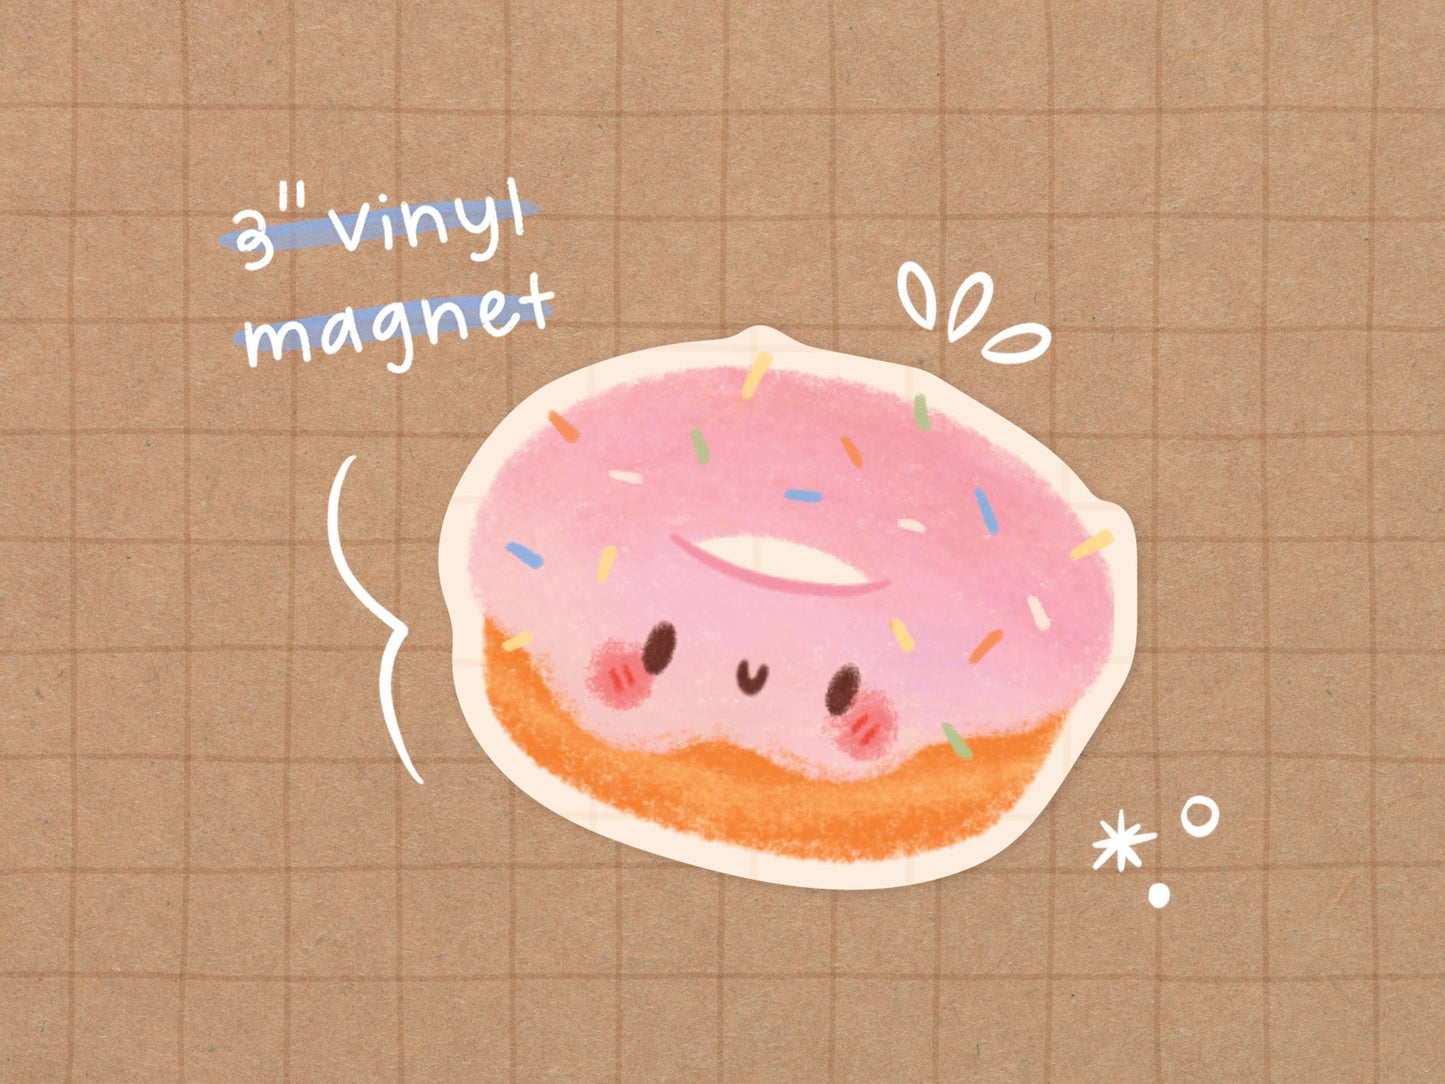 Pink Donut Vinyl Magnet